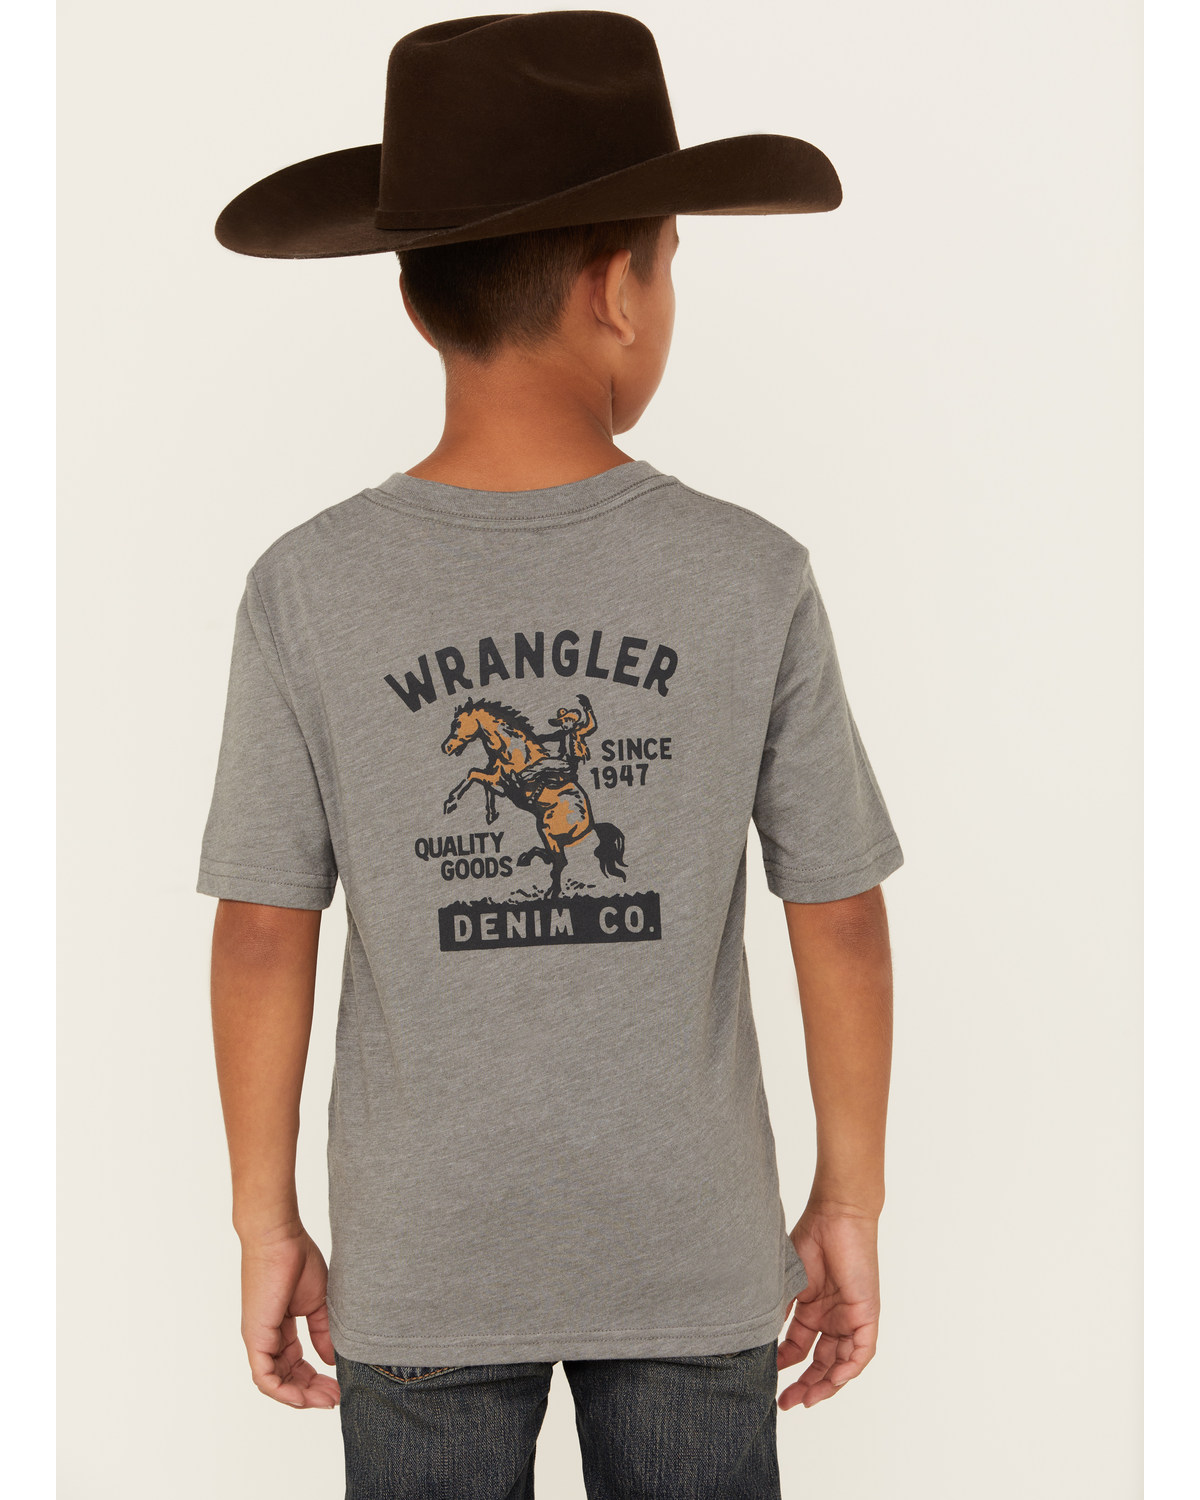 Wrangler Boys' Rodeo Short Sleeve Graphic T-Shirt